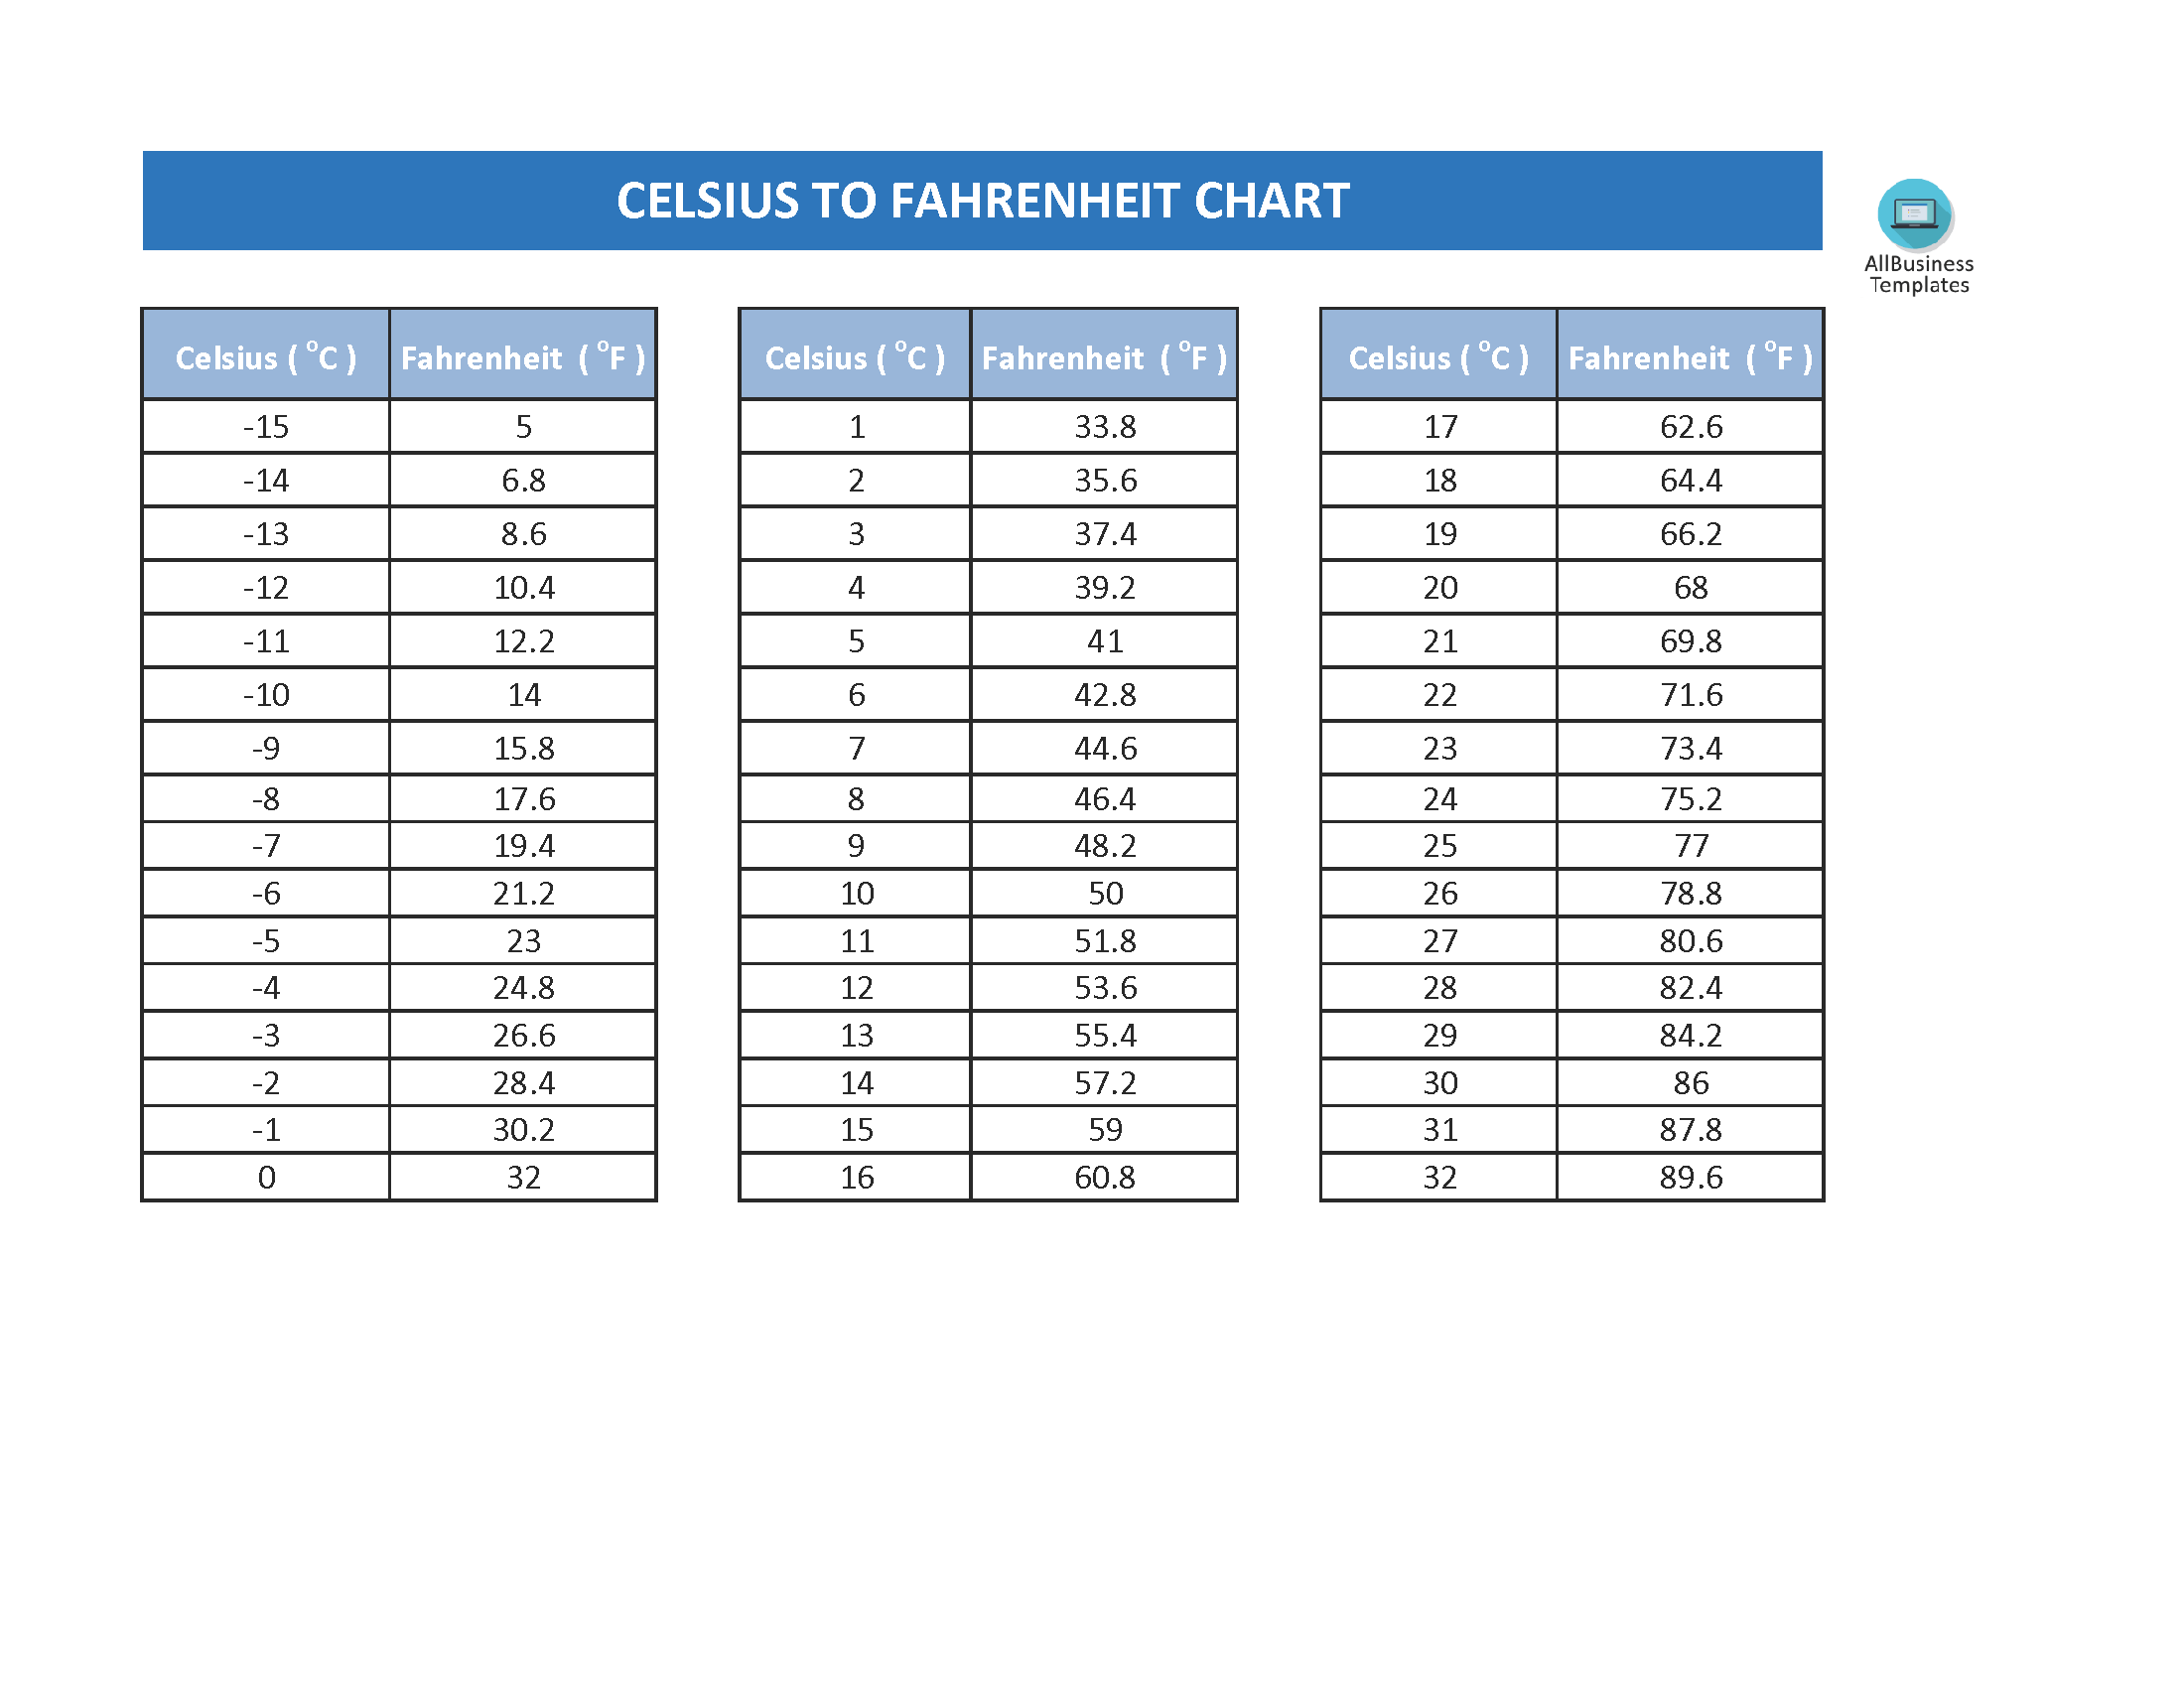 Celsius to Fahrenheit Chart 模板